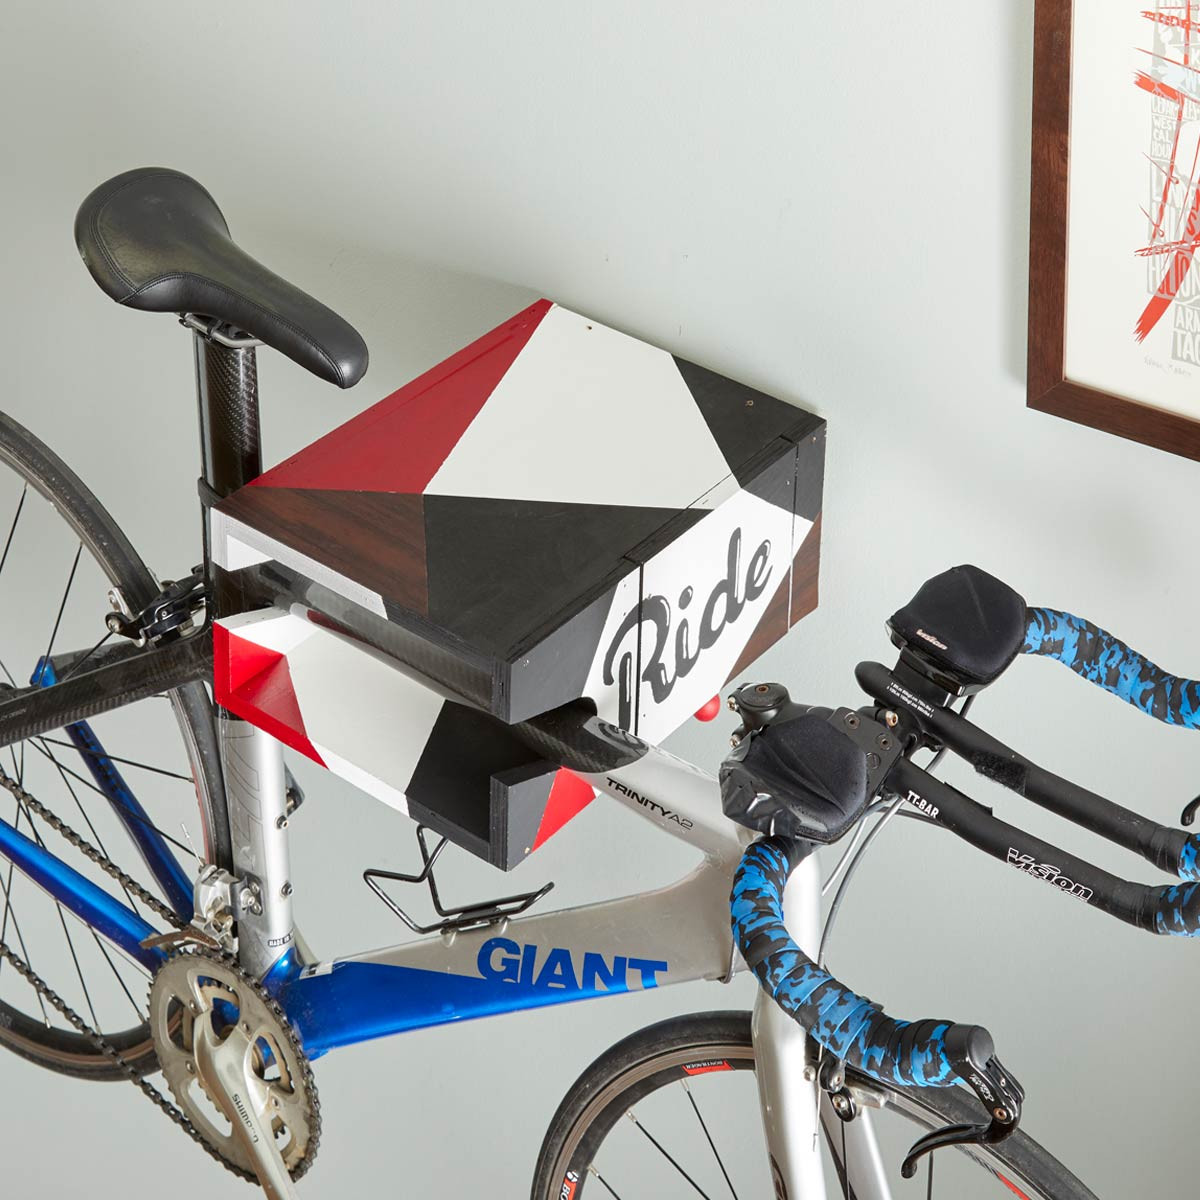 DIY Wall Bike Rack
 How To Build A Wall Mounted Bike Rack With Storage — The